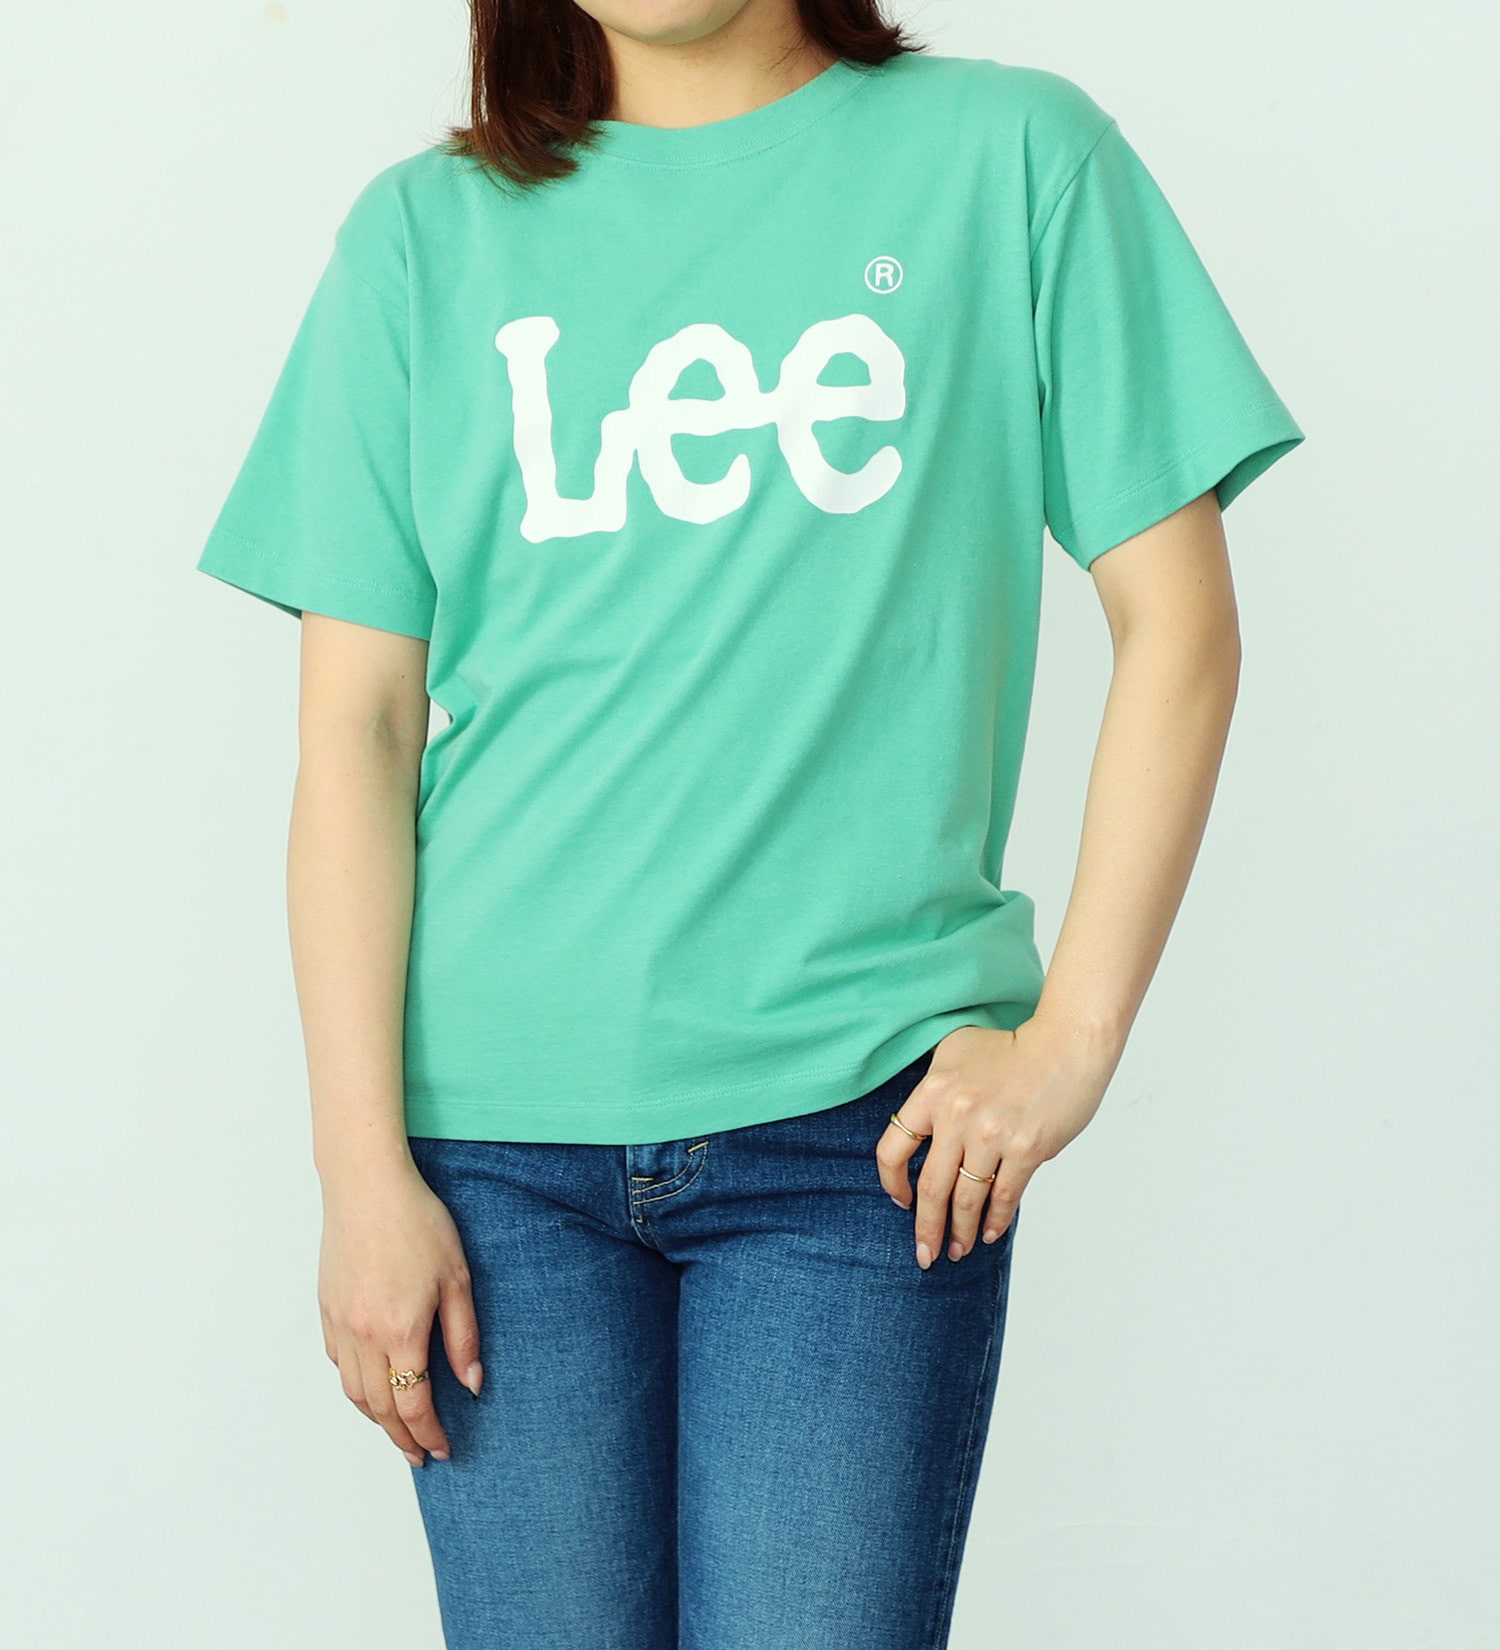 Lee(リー)の【FINAL SALE】Lee ロゴ ショートスリーブTee|トップス/Tシャツ/カットソー/メンズ|ミント